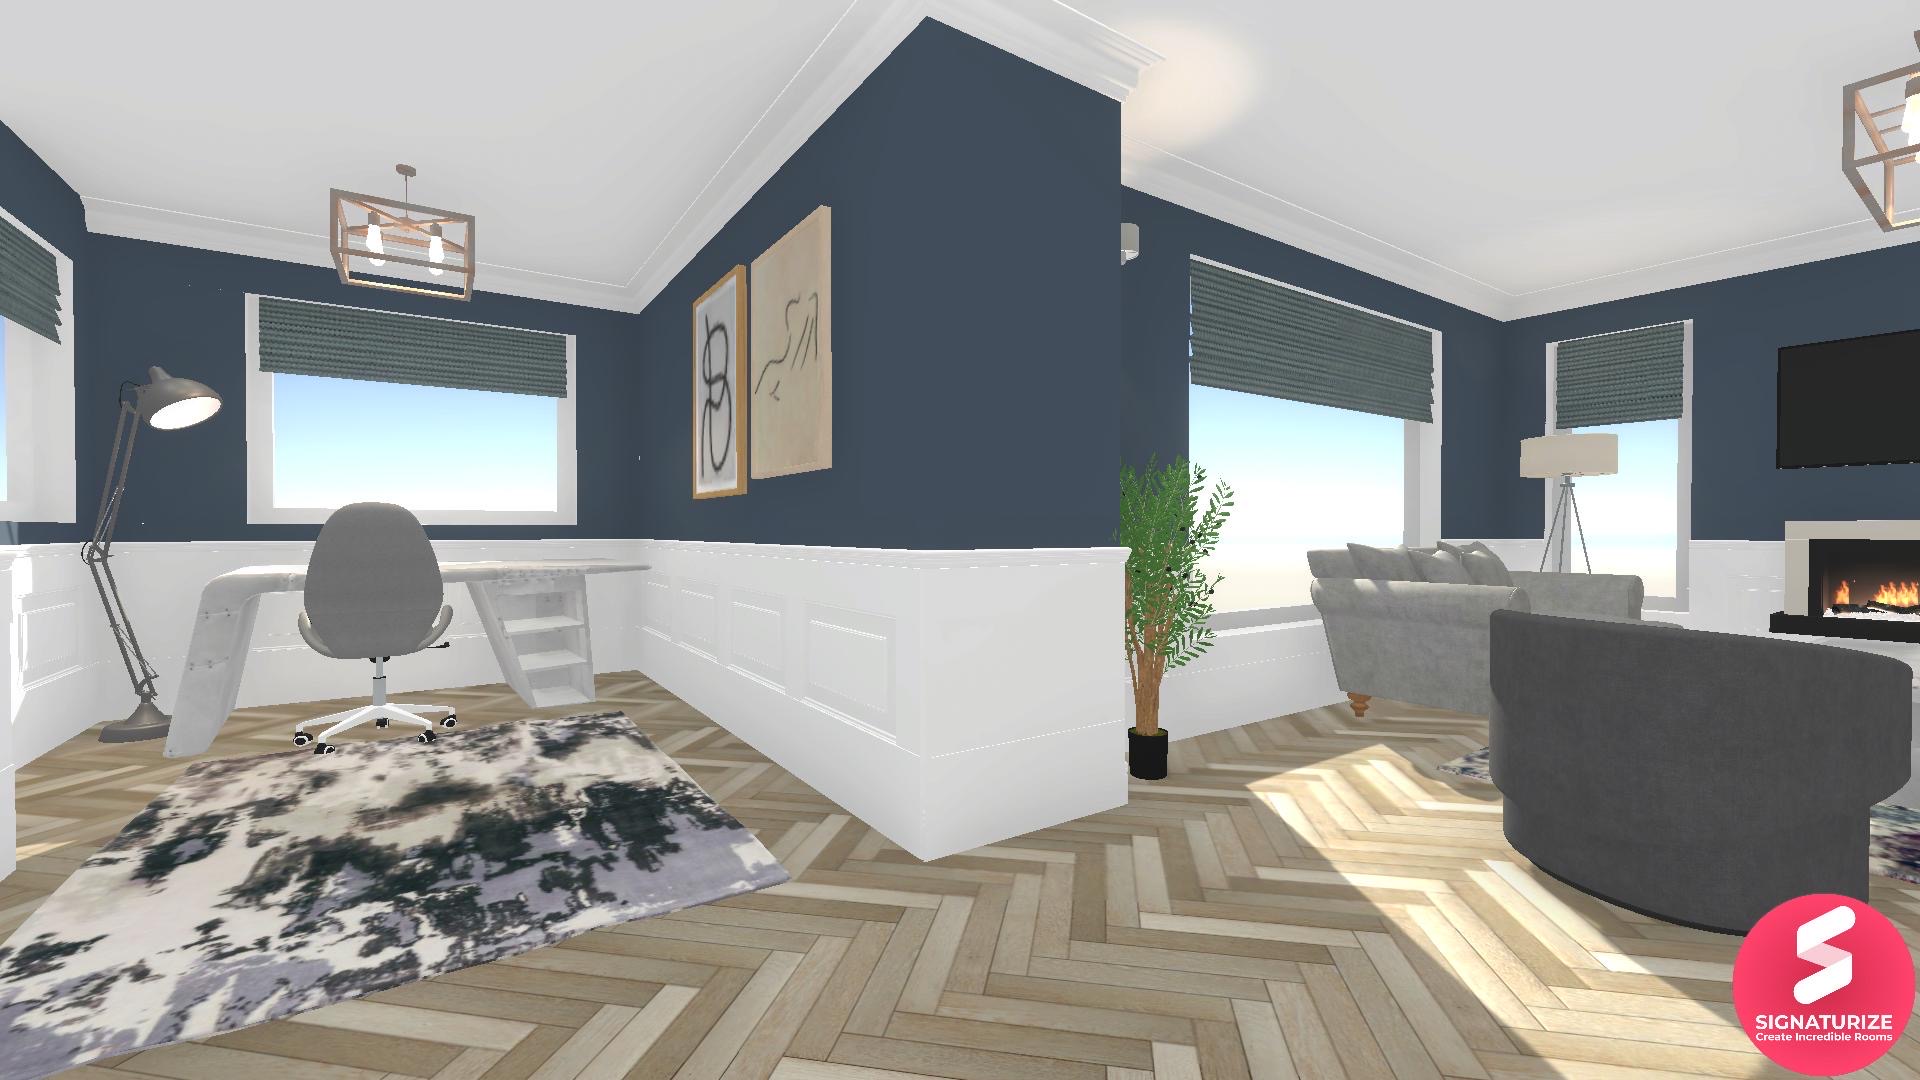 Contemporary living room idea with blue and grey contemporary rug, herring bone floor